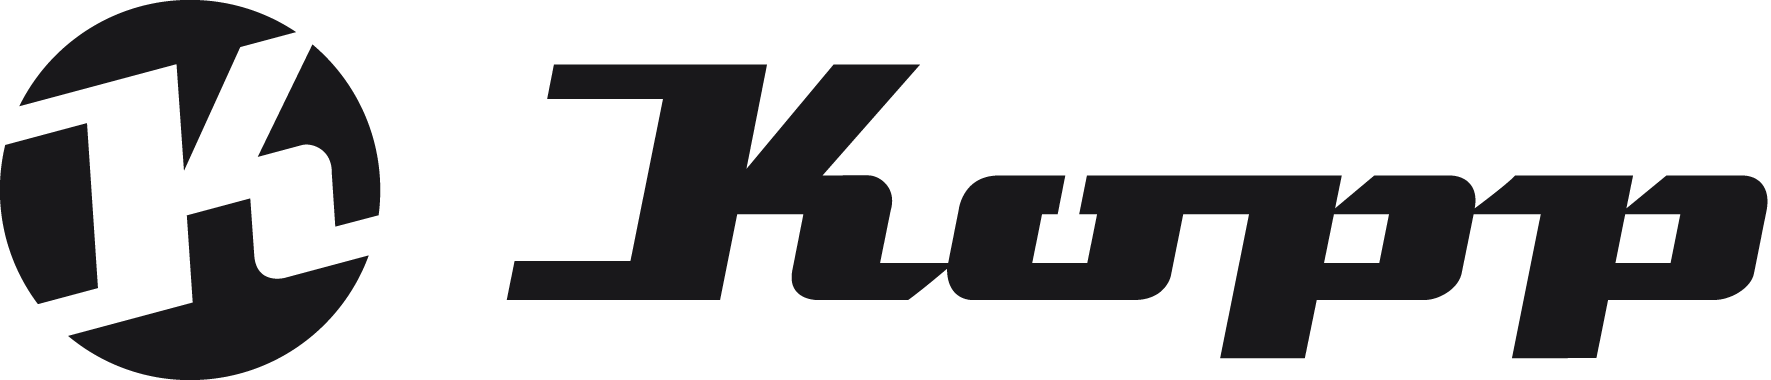 Kopp_mit_K_Logo_schwarz